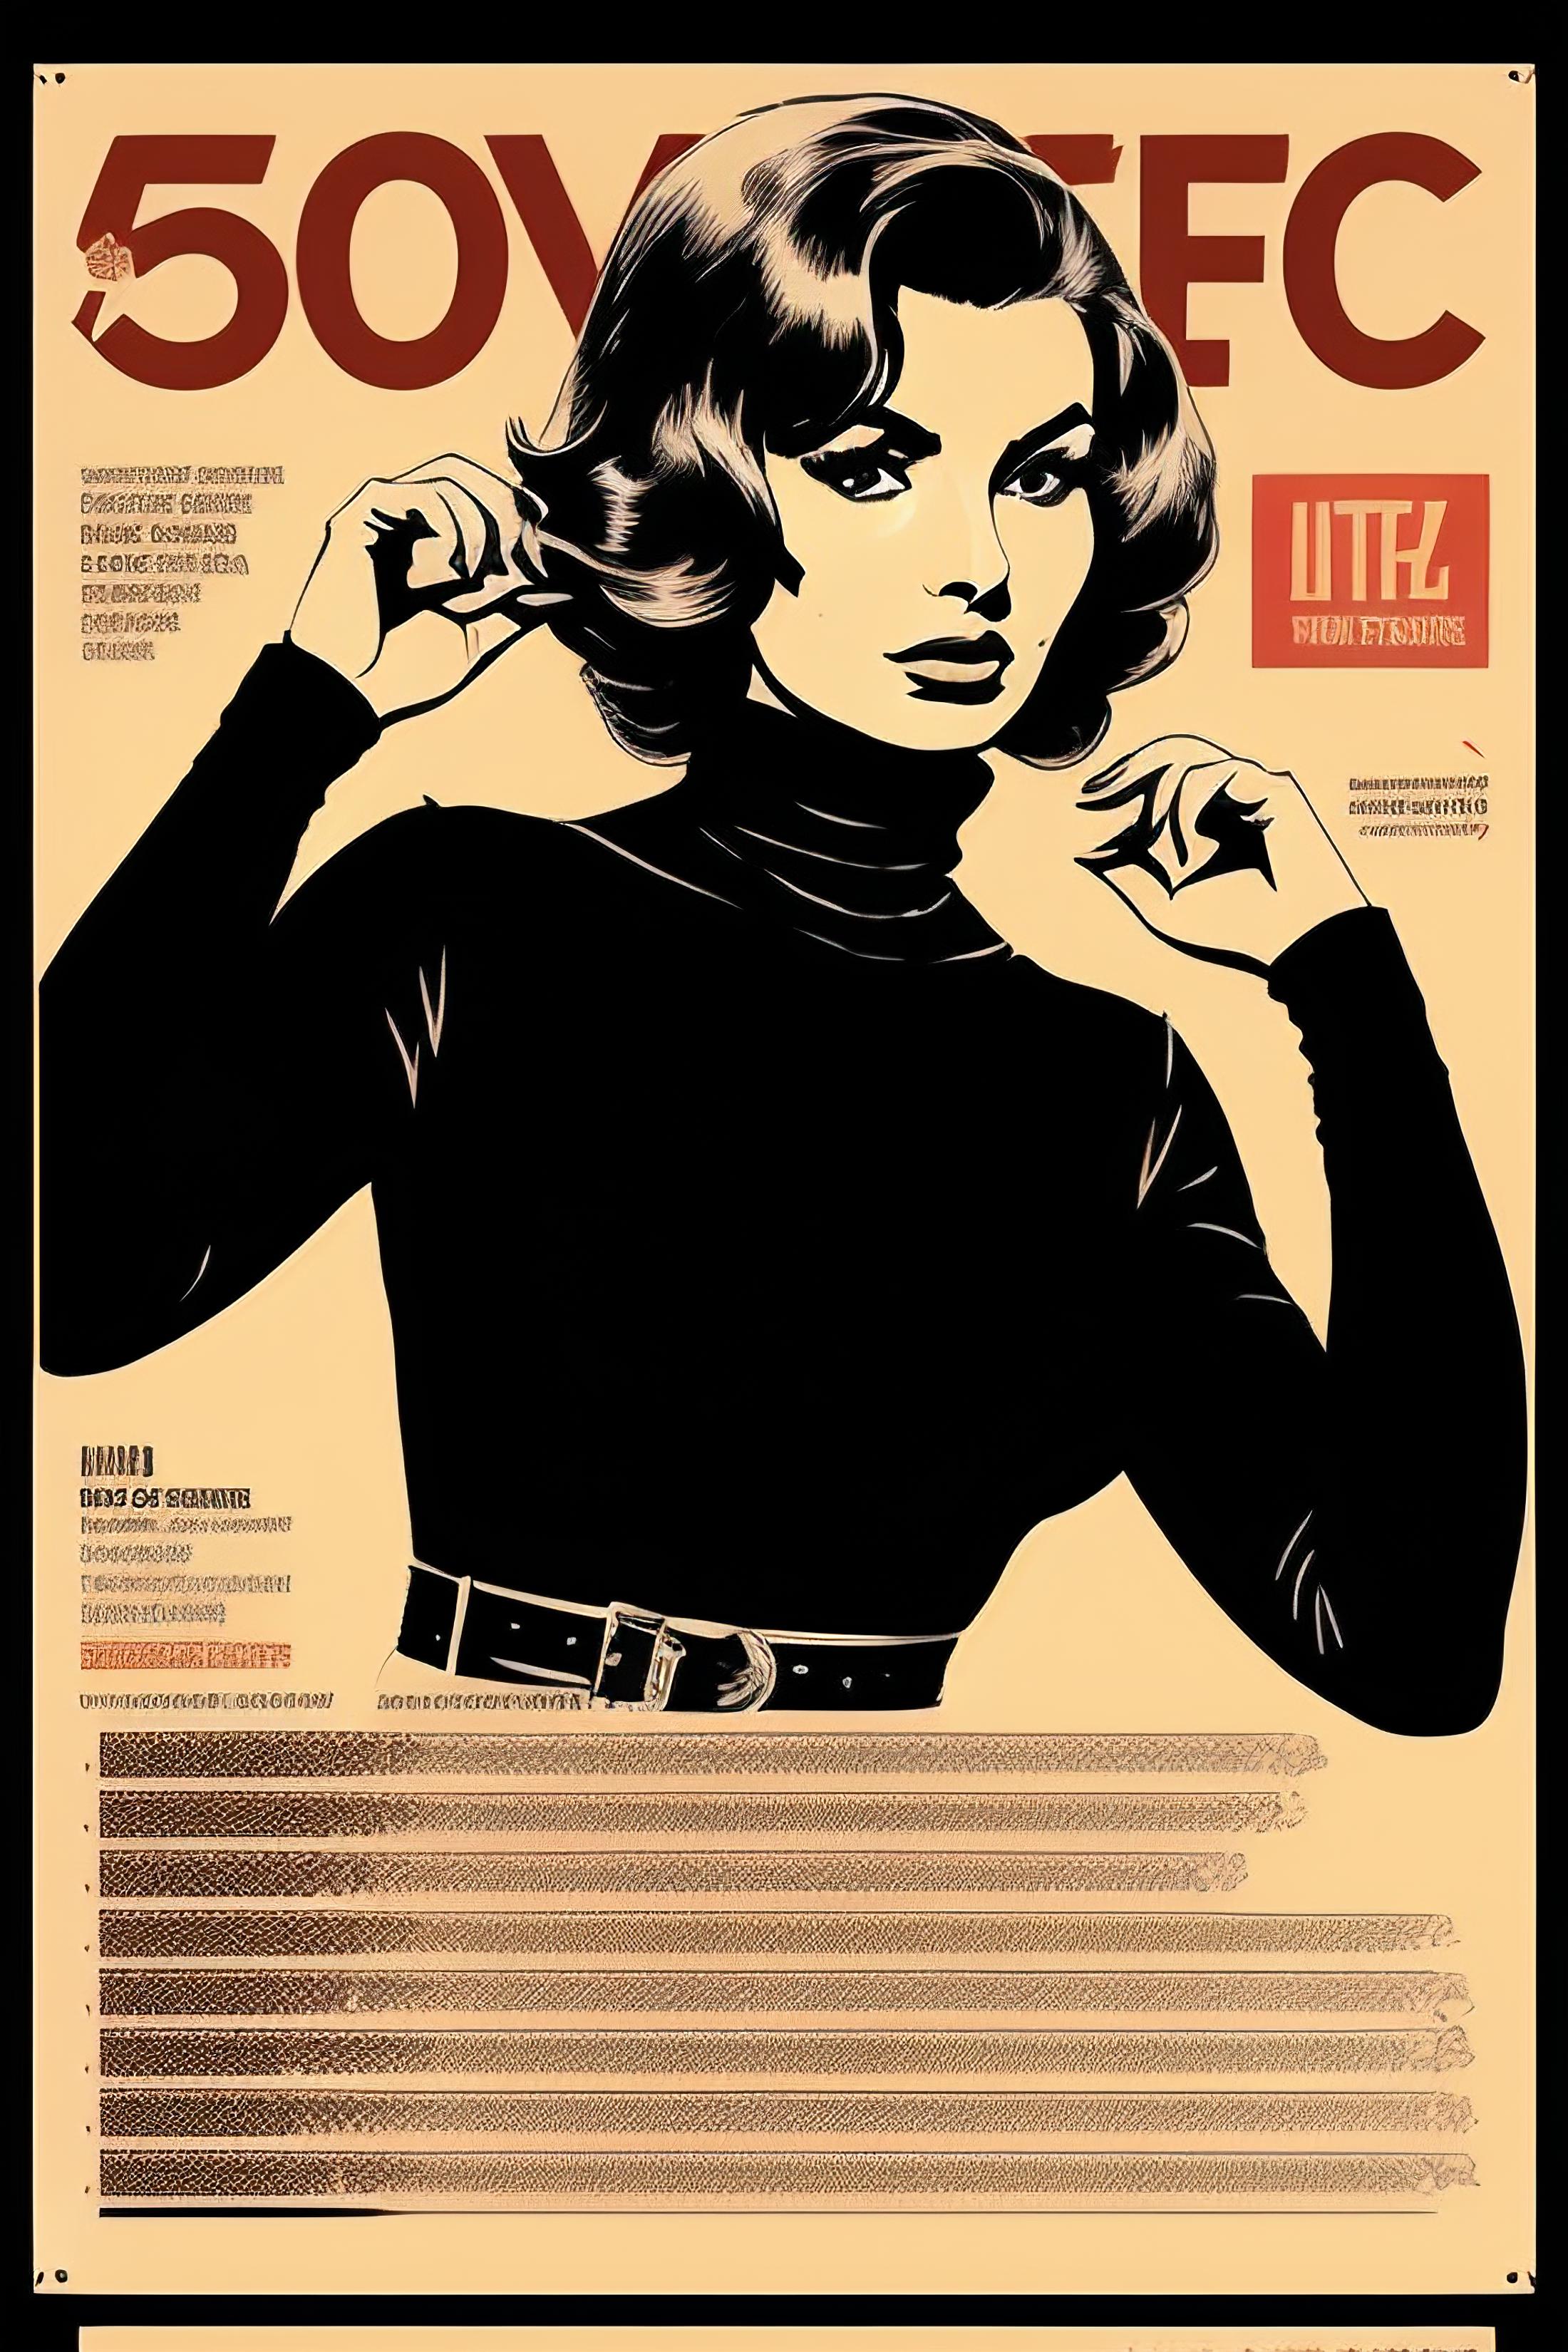 Sophia Loren (JG) image by ElizaPottinger